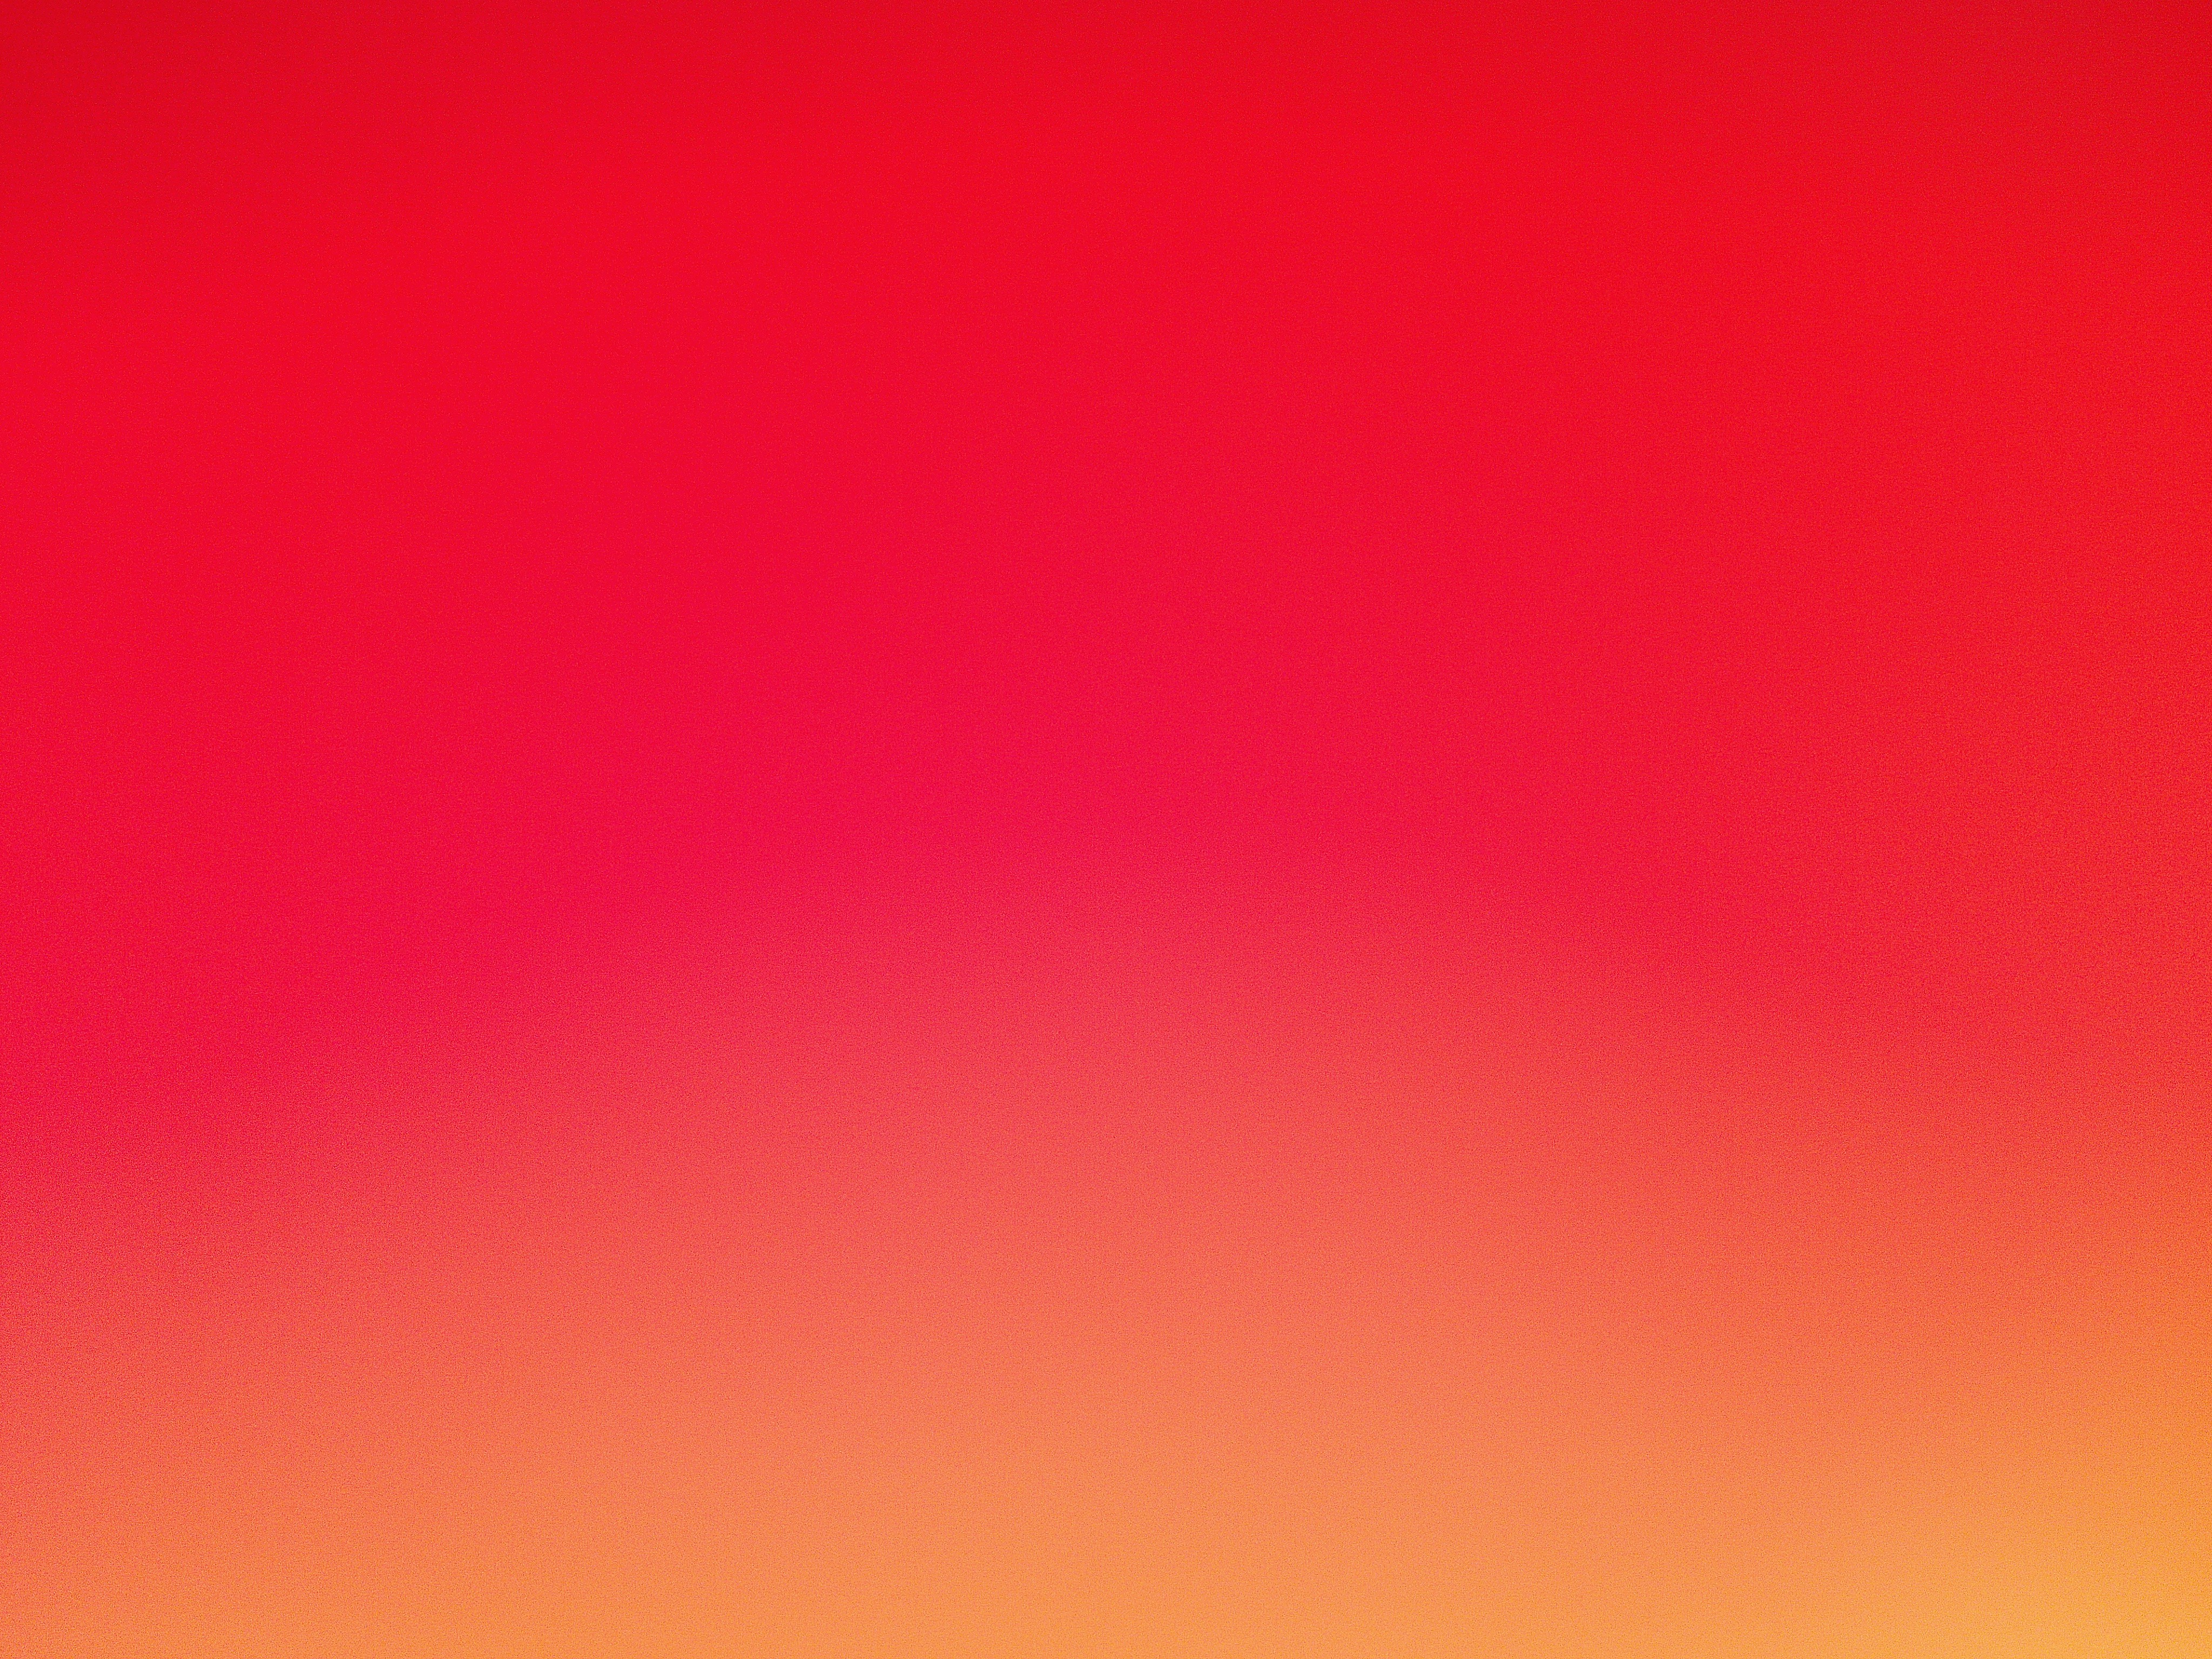 General 4096x3072 gradient red orange